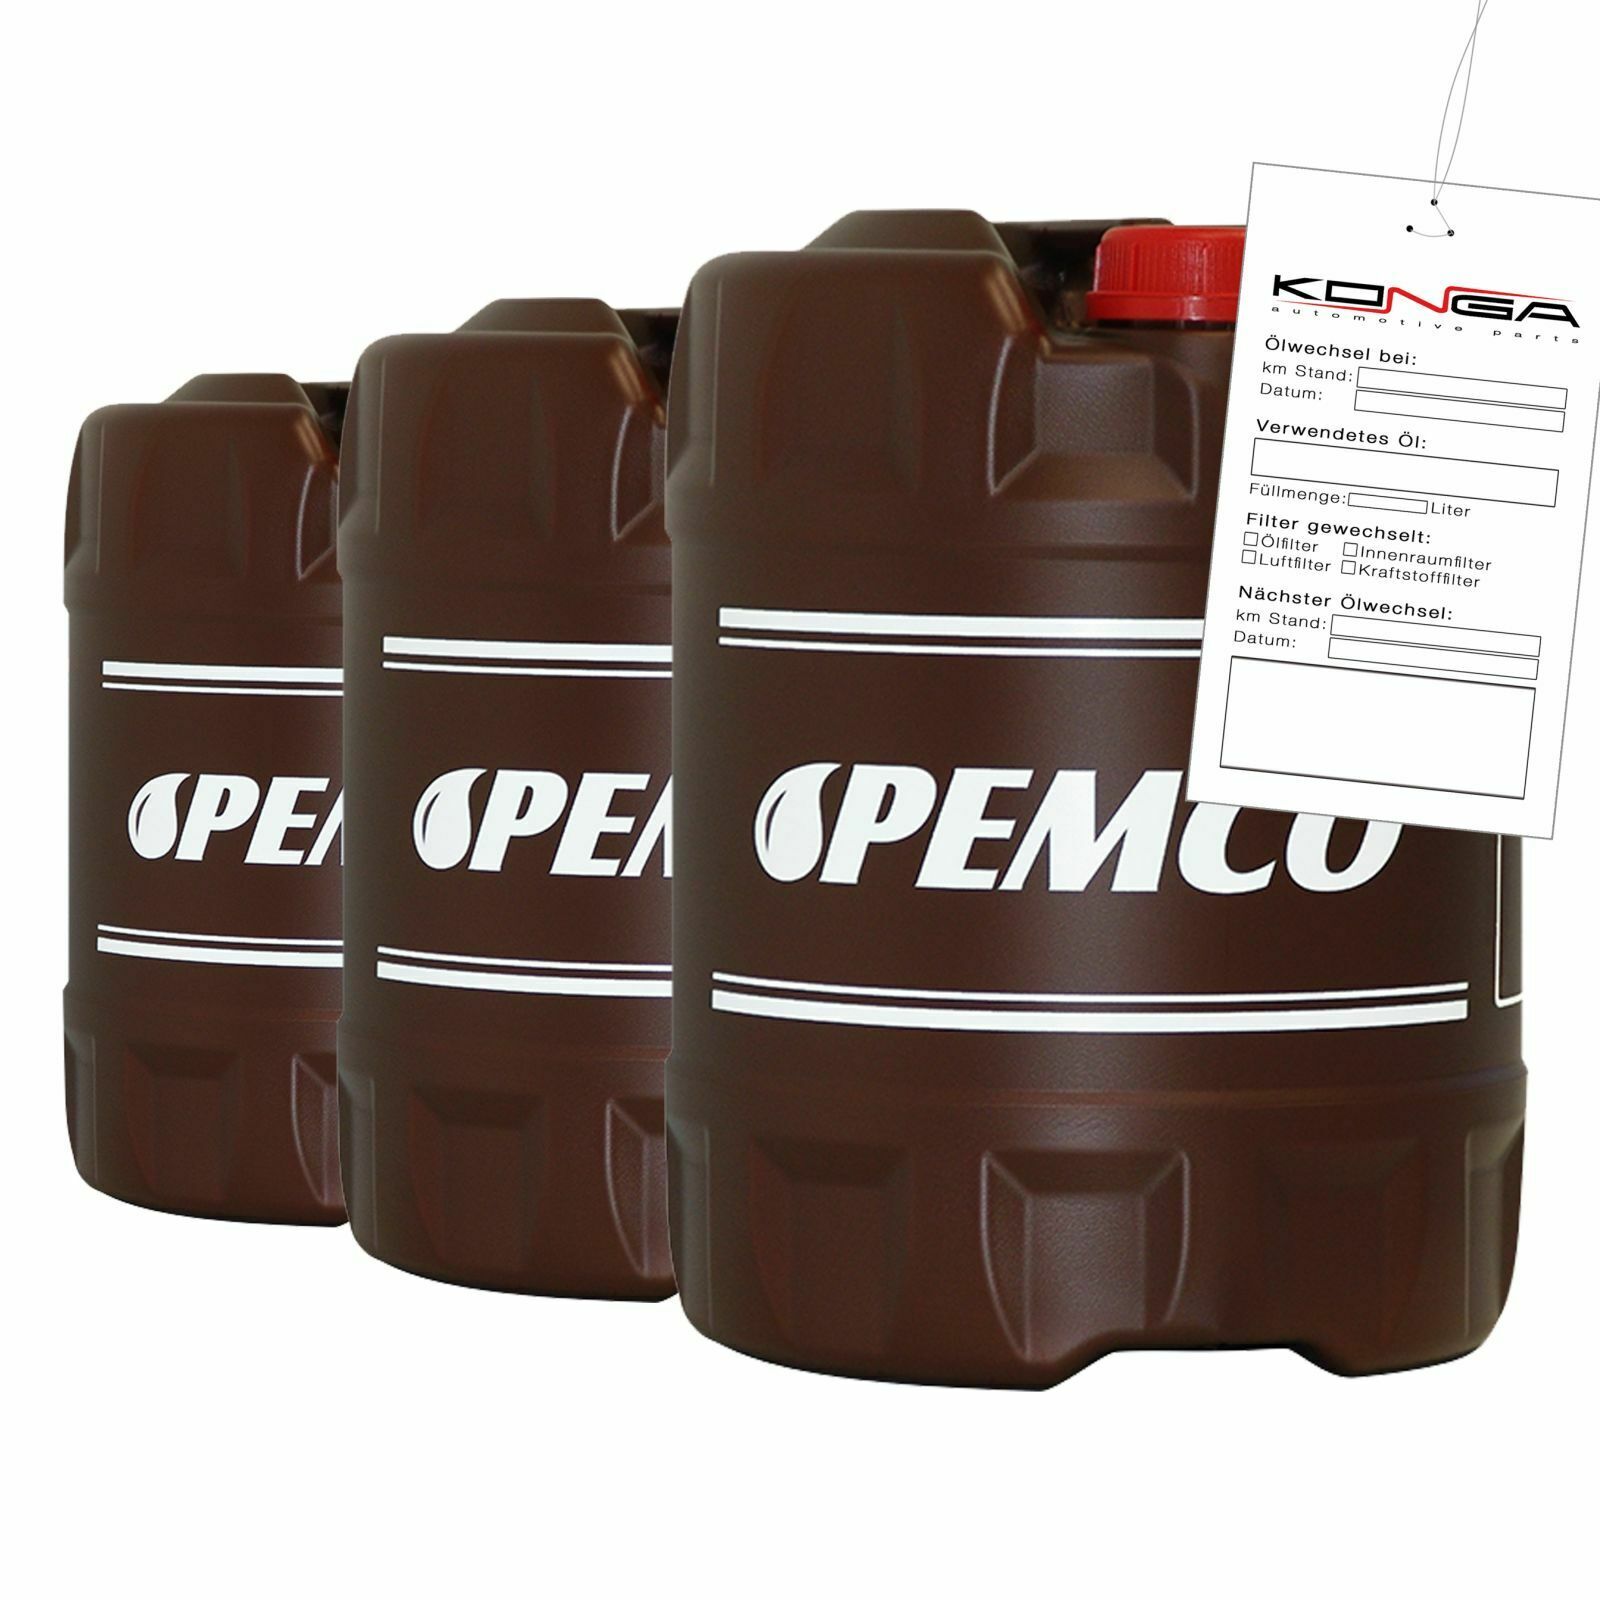 60 Liter PEMCO Hydro ISO 46 Hydrauliköl HLP 46 DIN 51524 DENISON HF AFNOR 48600